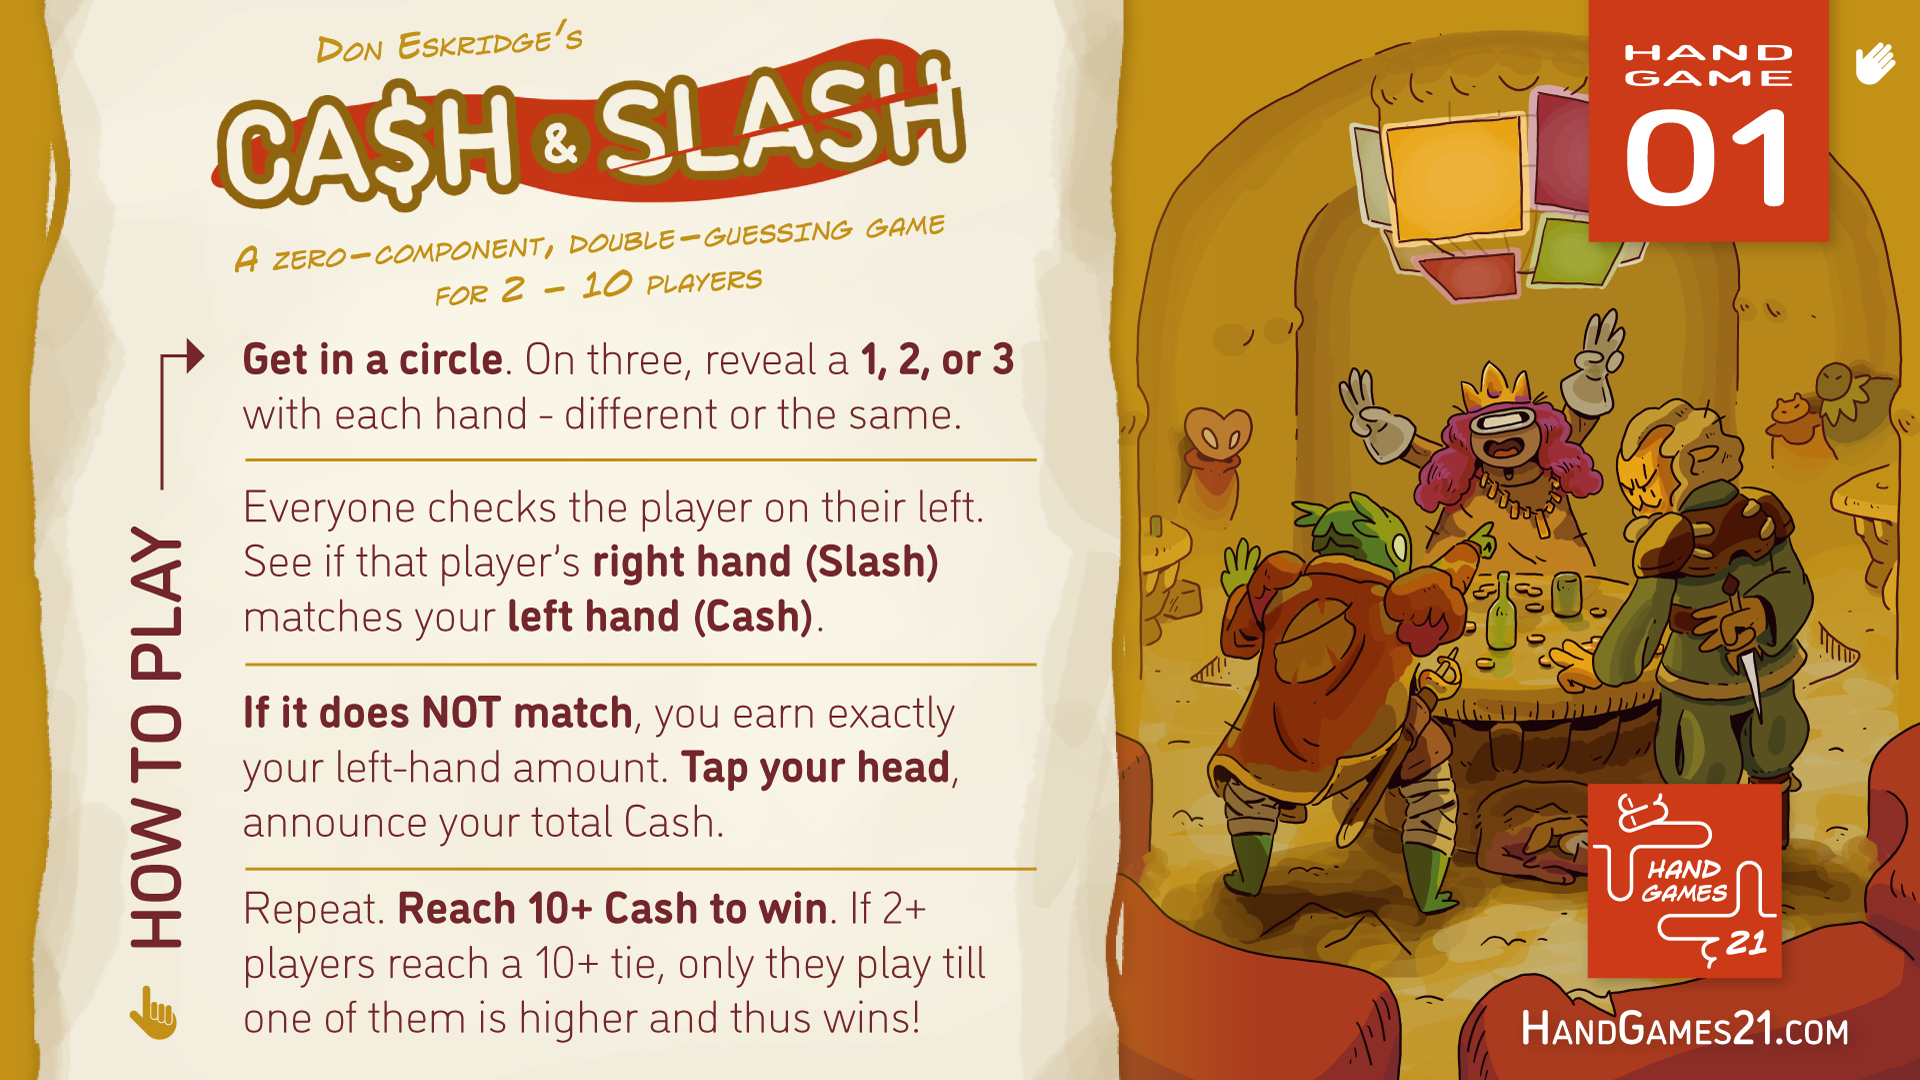 Hand Games 21 Cash and Slash